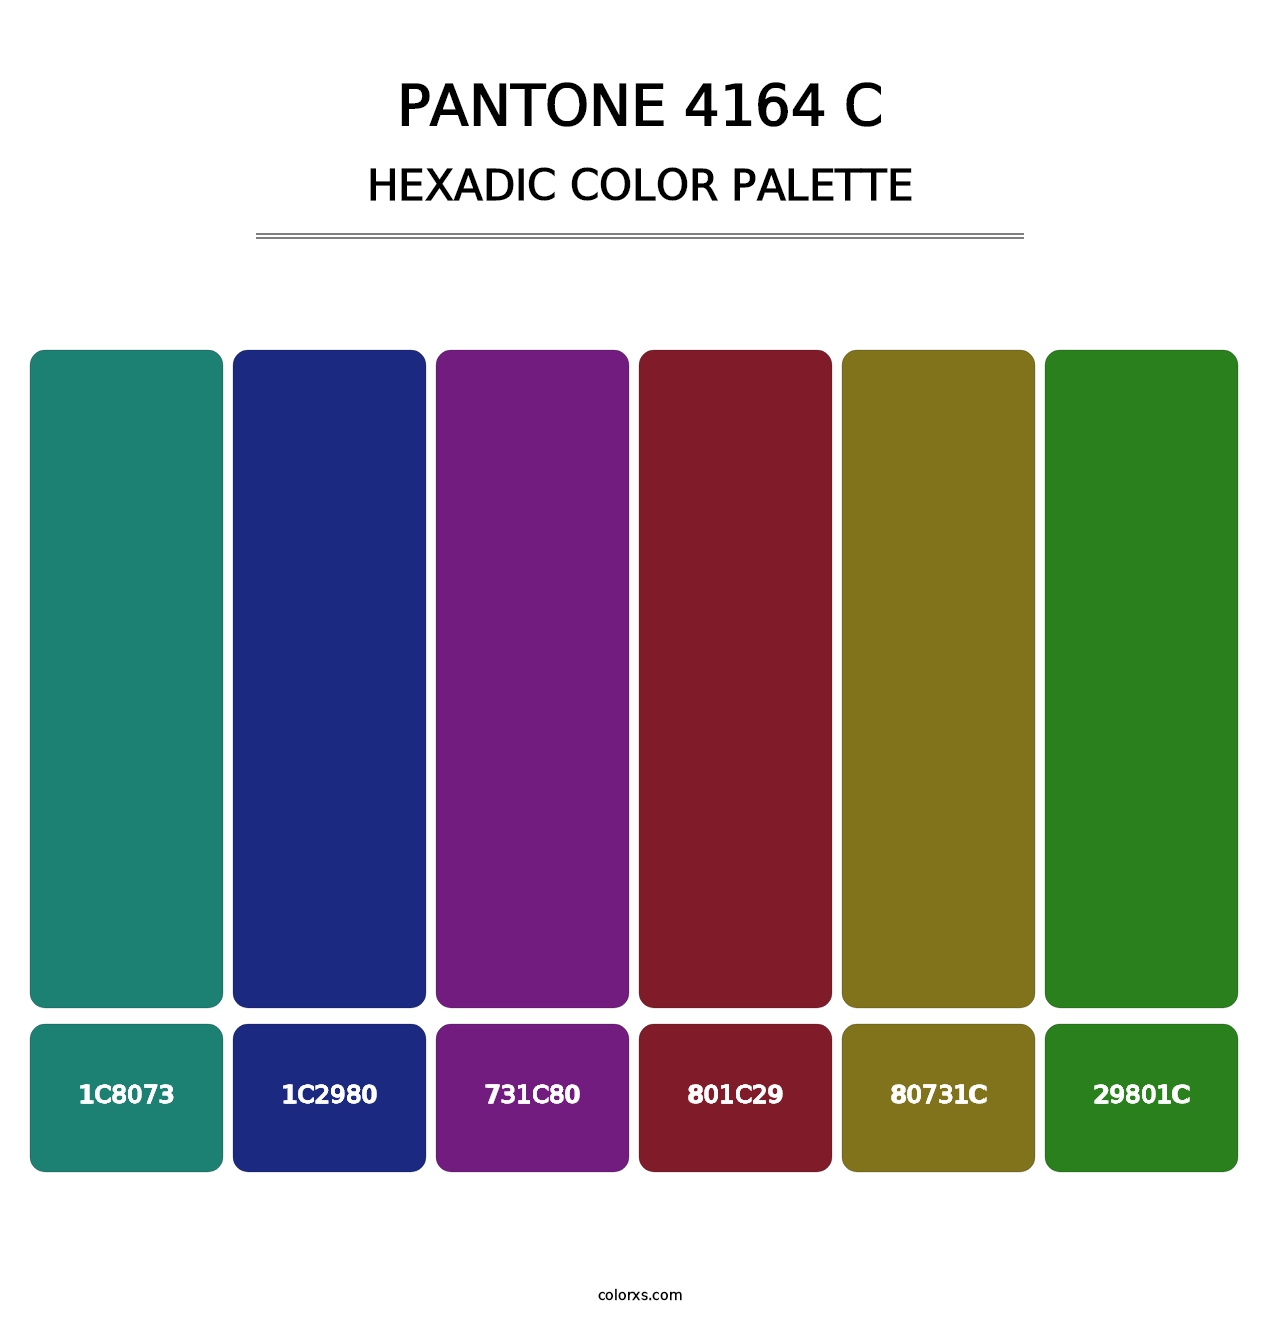 PANTONE 4164 C - Hexadic Color Palette